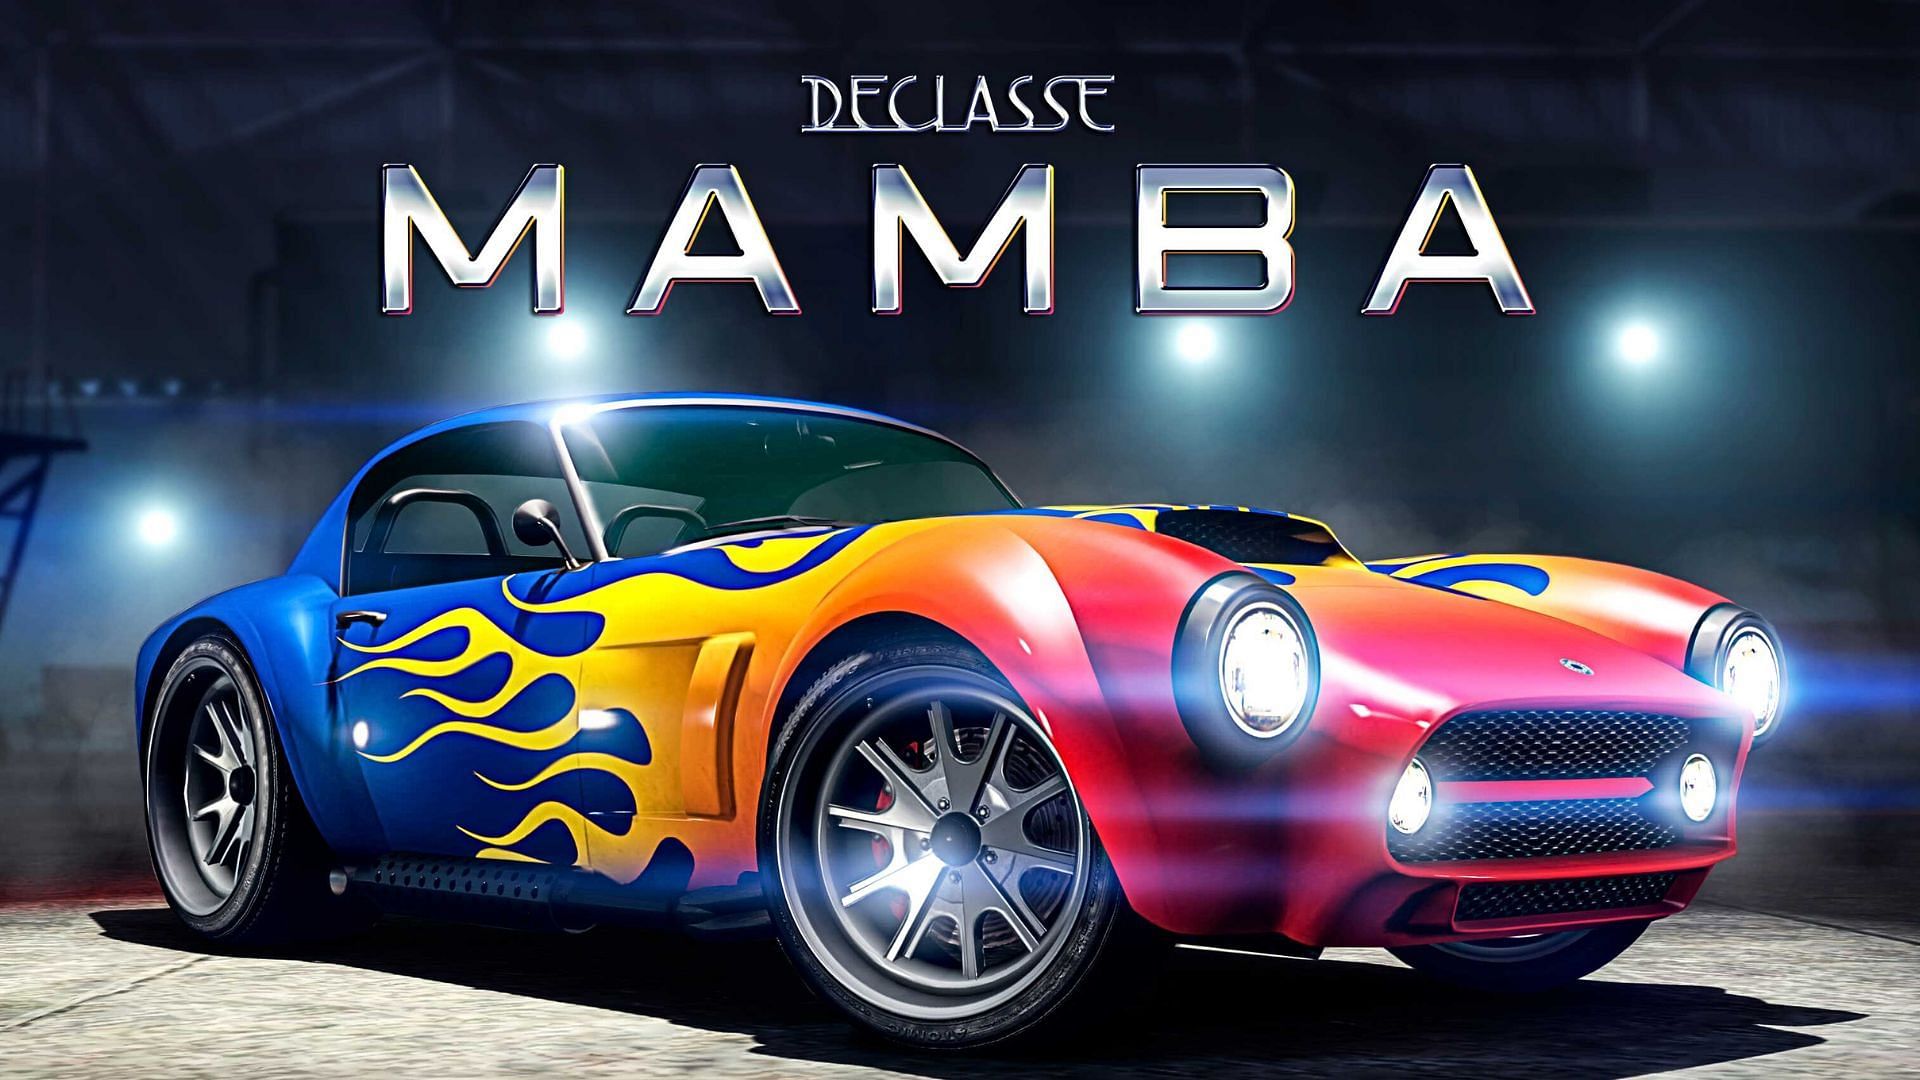 The Declasse Mamba debuted in GTA Online in 2015 (Image via Rockstar Games)